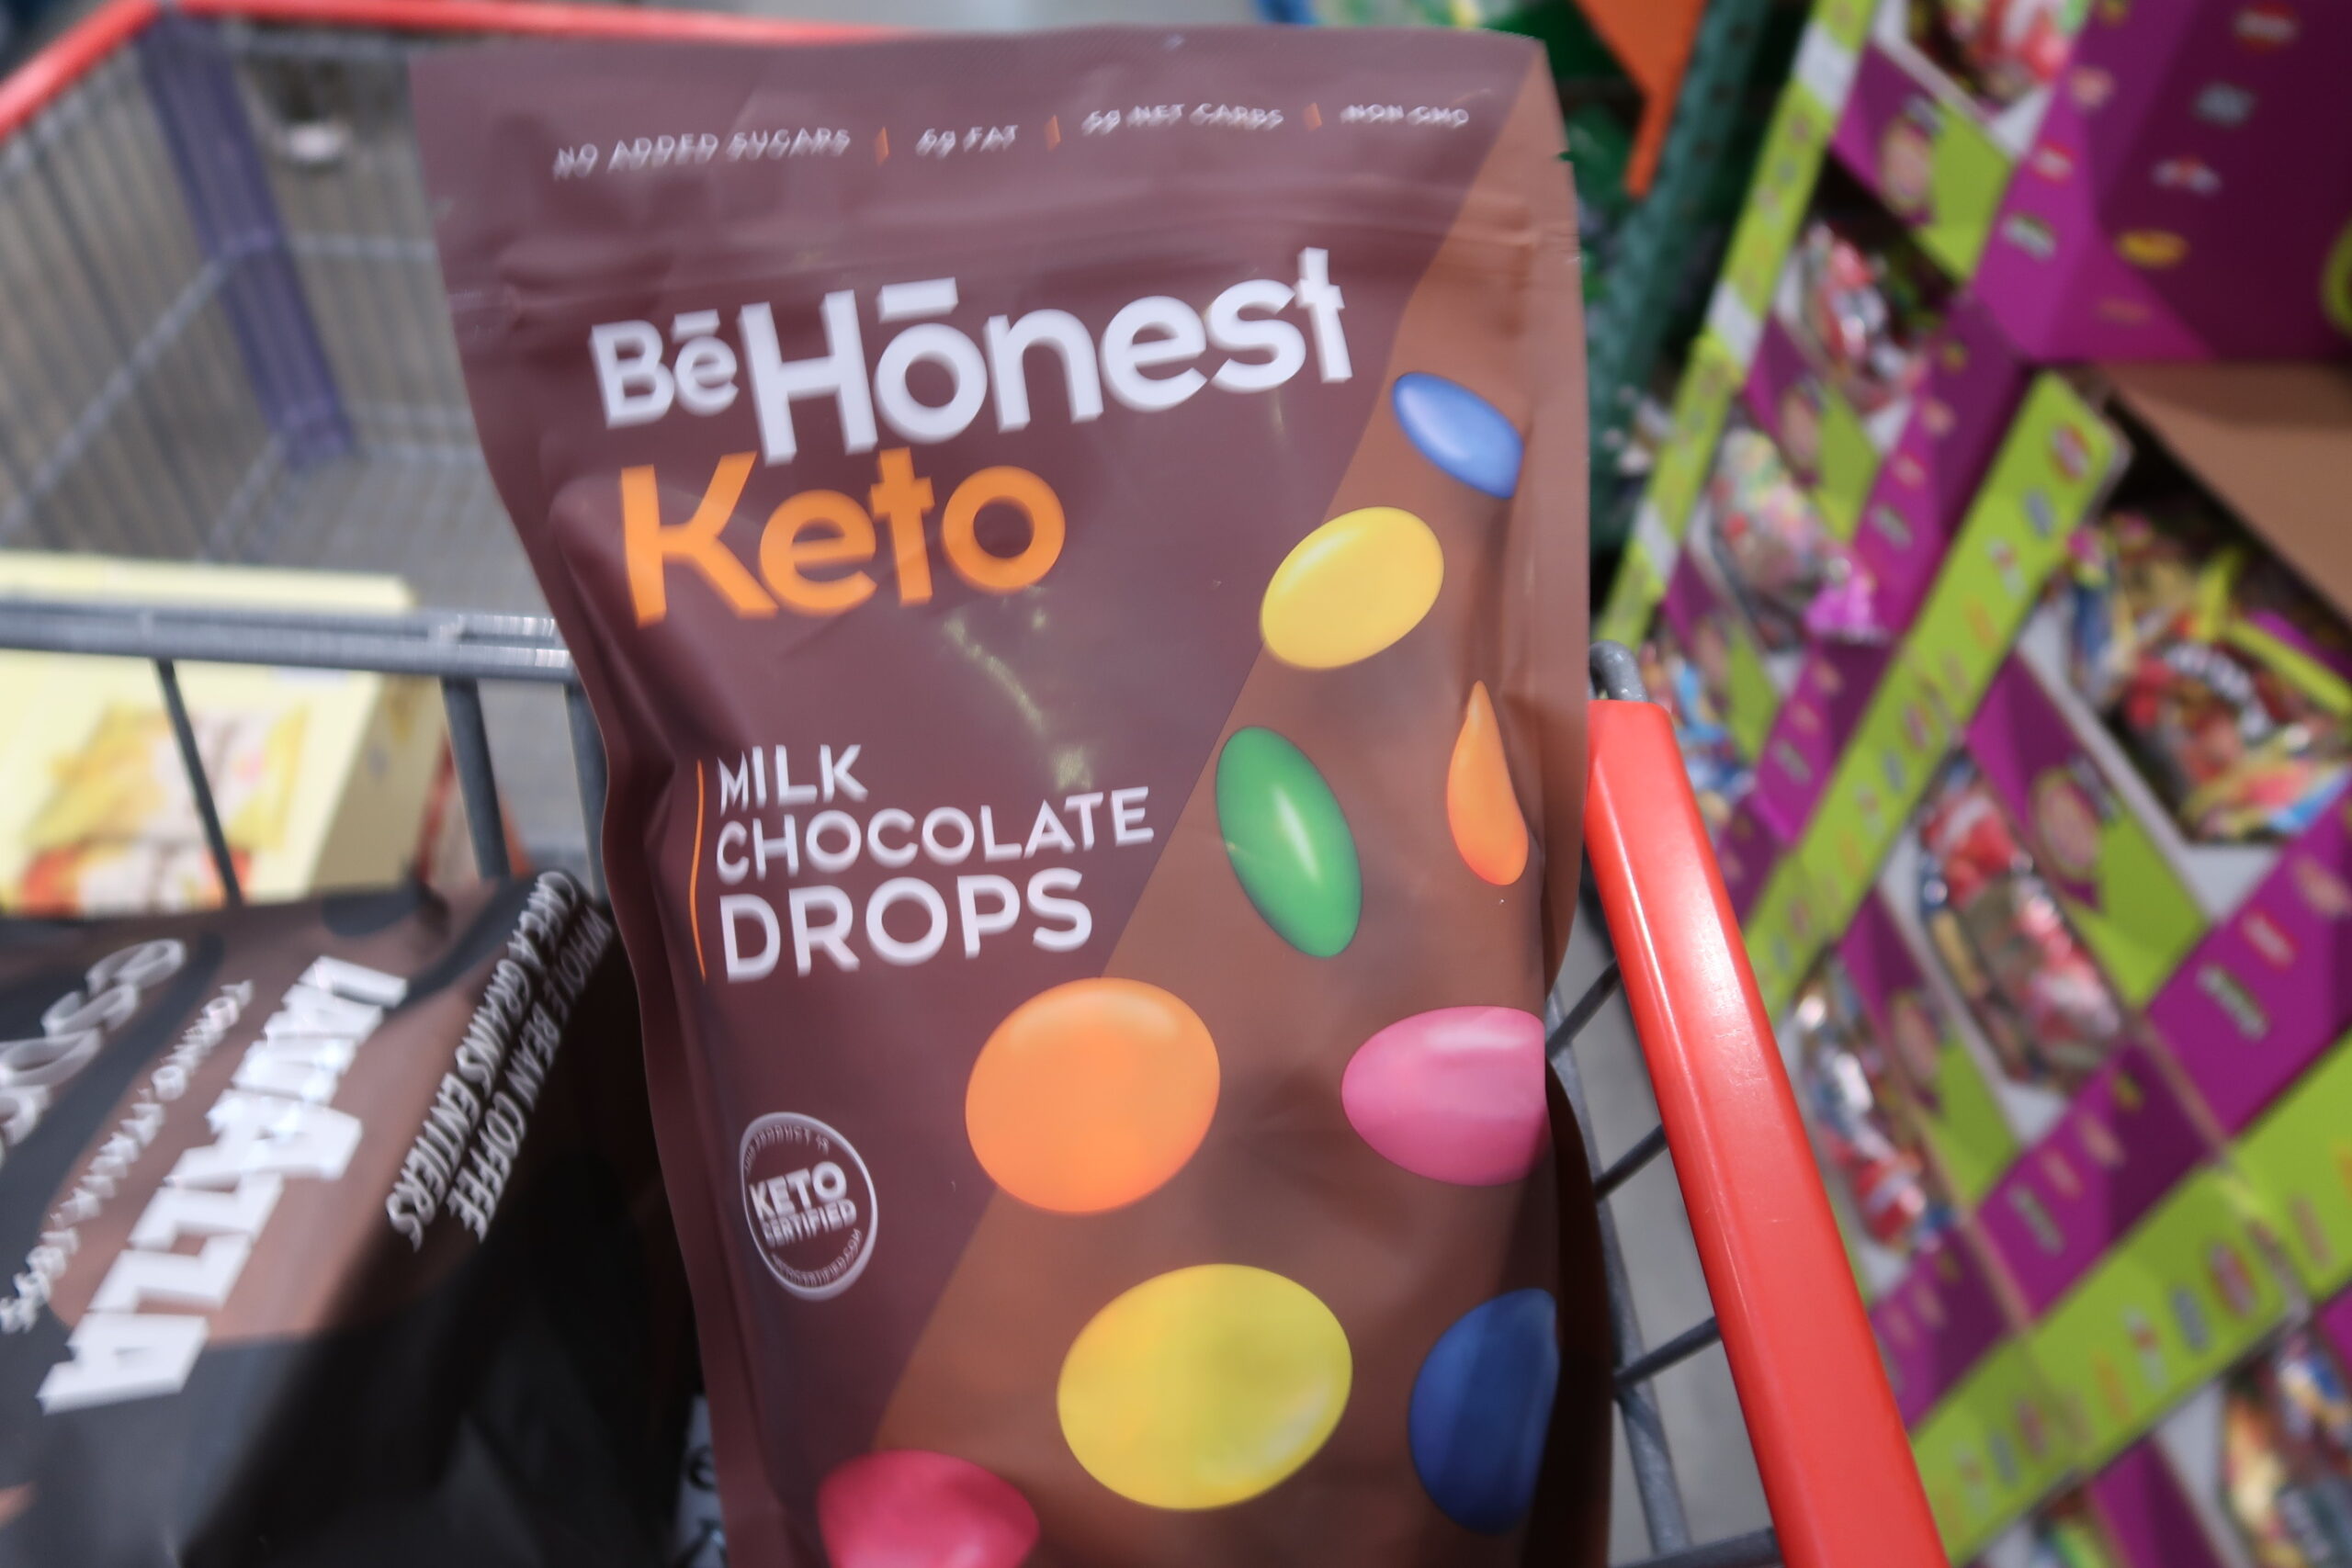 Be Honest Keto Milk Chocolate Drops $13.99